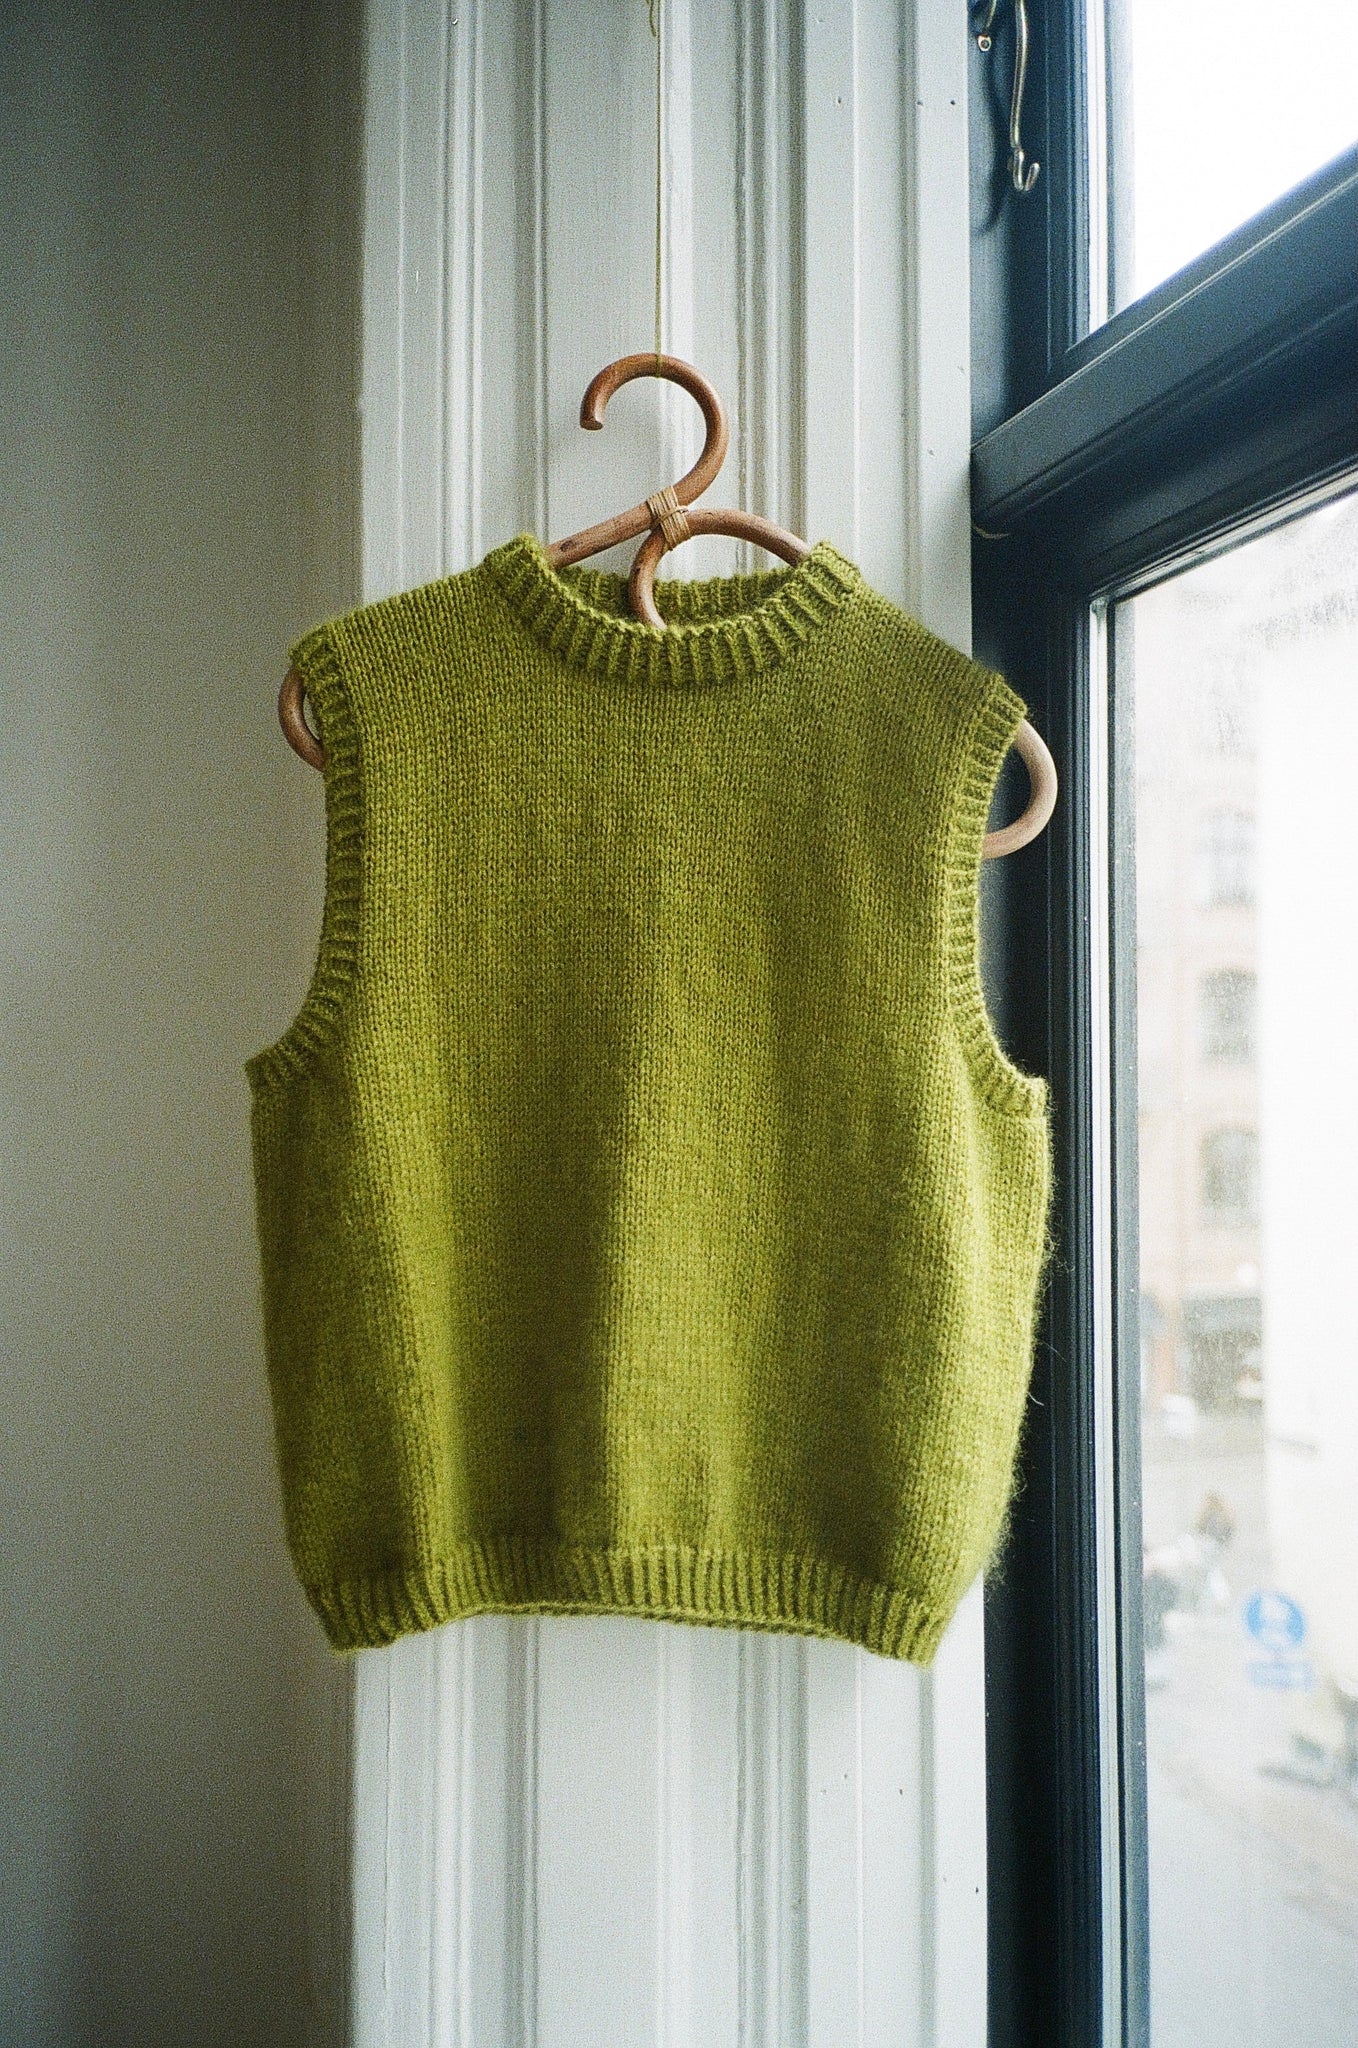 Deima's daily vest - knitting pattern (english) – Deima Knitwear